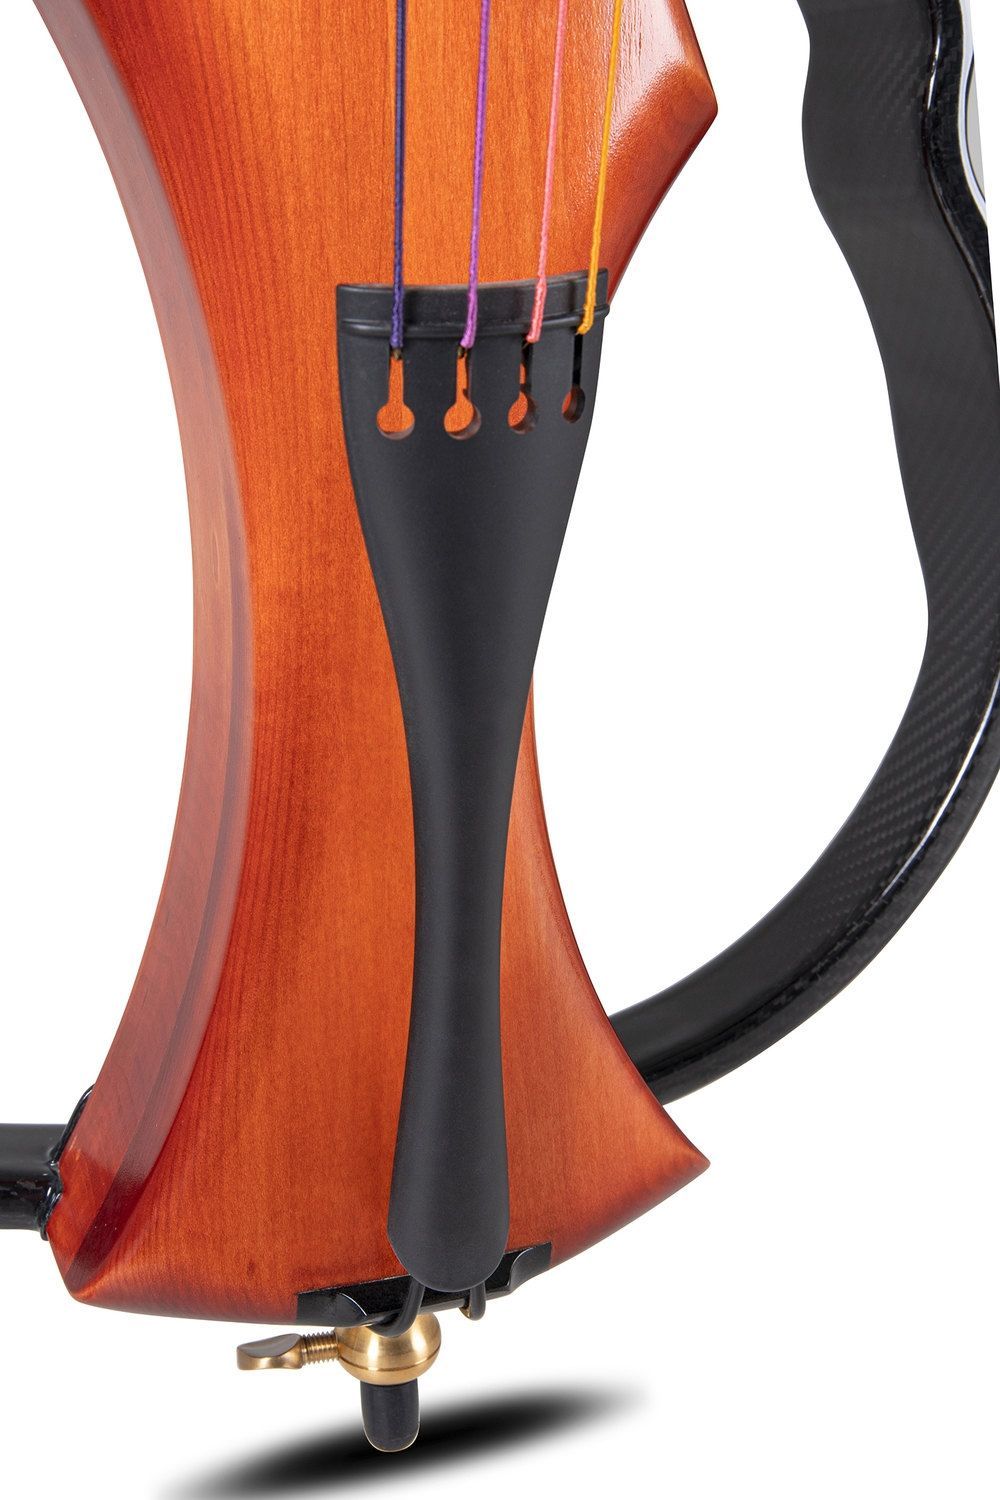 GEWA E-Cello NOVITA 3.0 Farbe rotbraun-  incl.Prestige Gigbag -